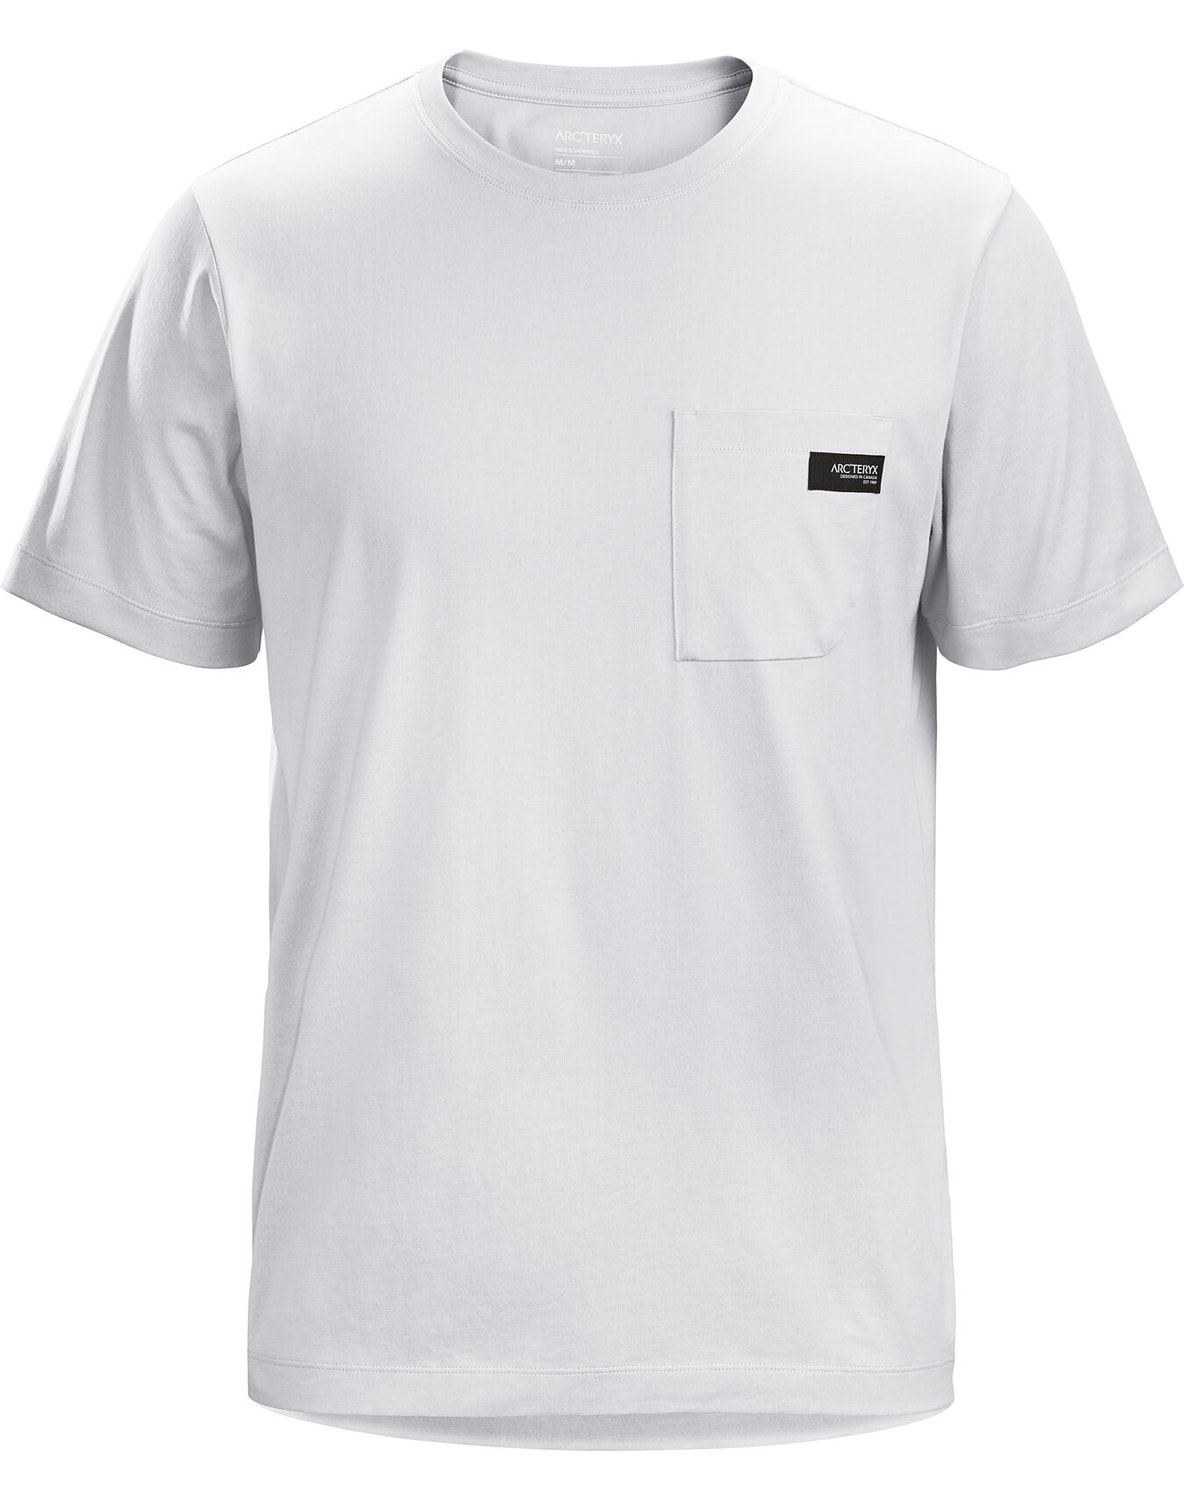 T-shirt Arc'teryx Cinder Pocket Uomo Bianche - IT-649317